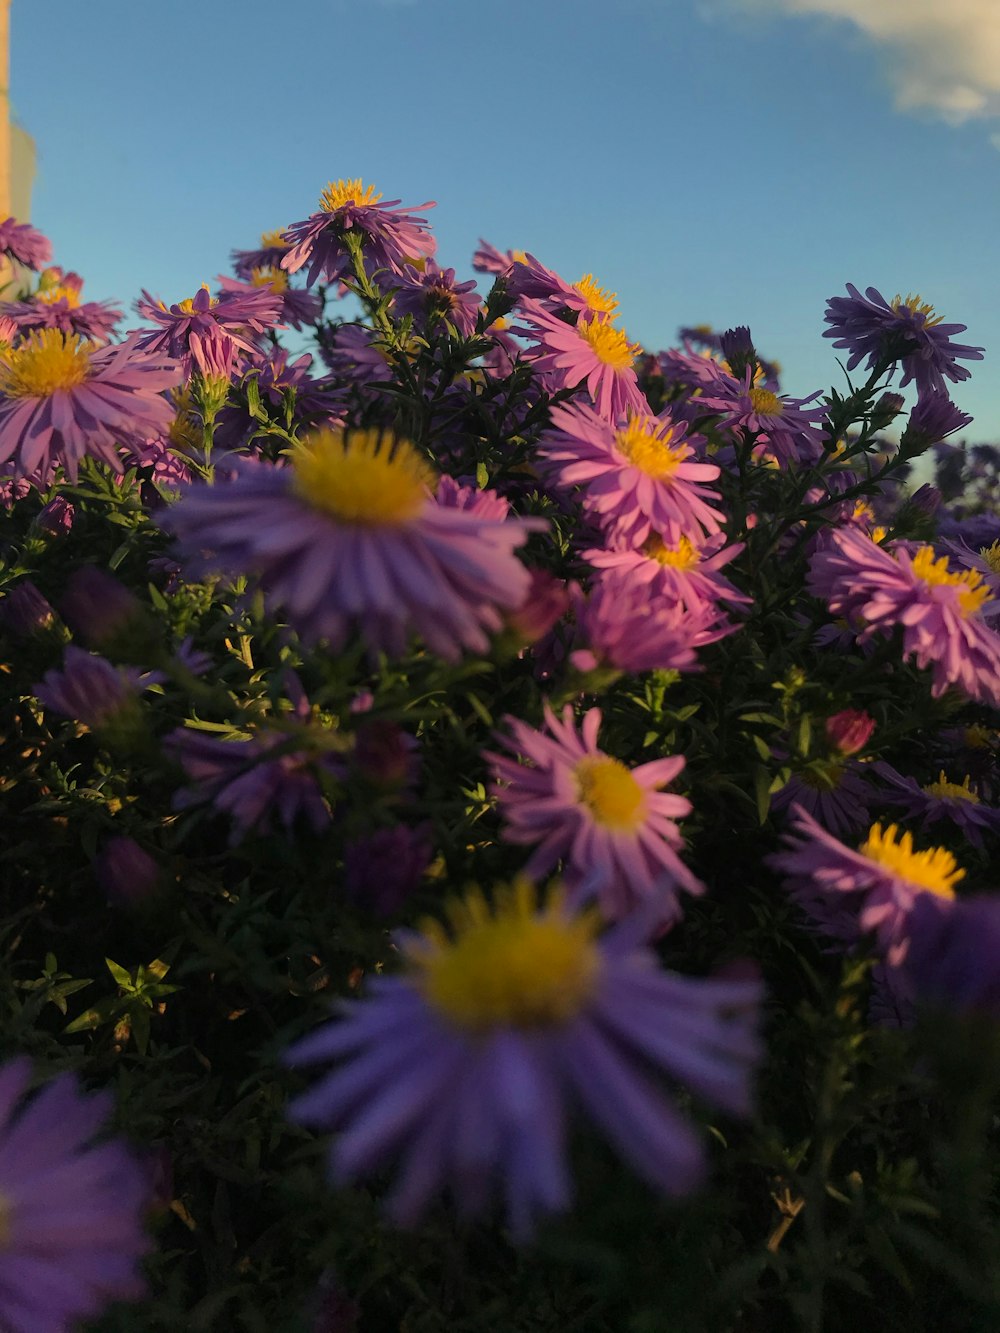 purple flowers under blue sky during daytime